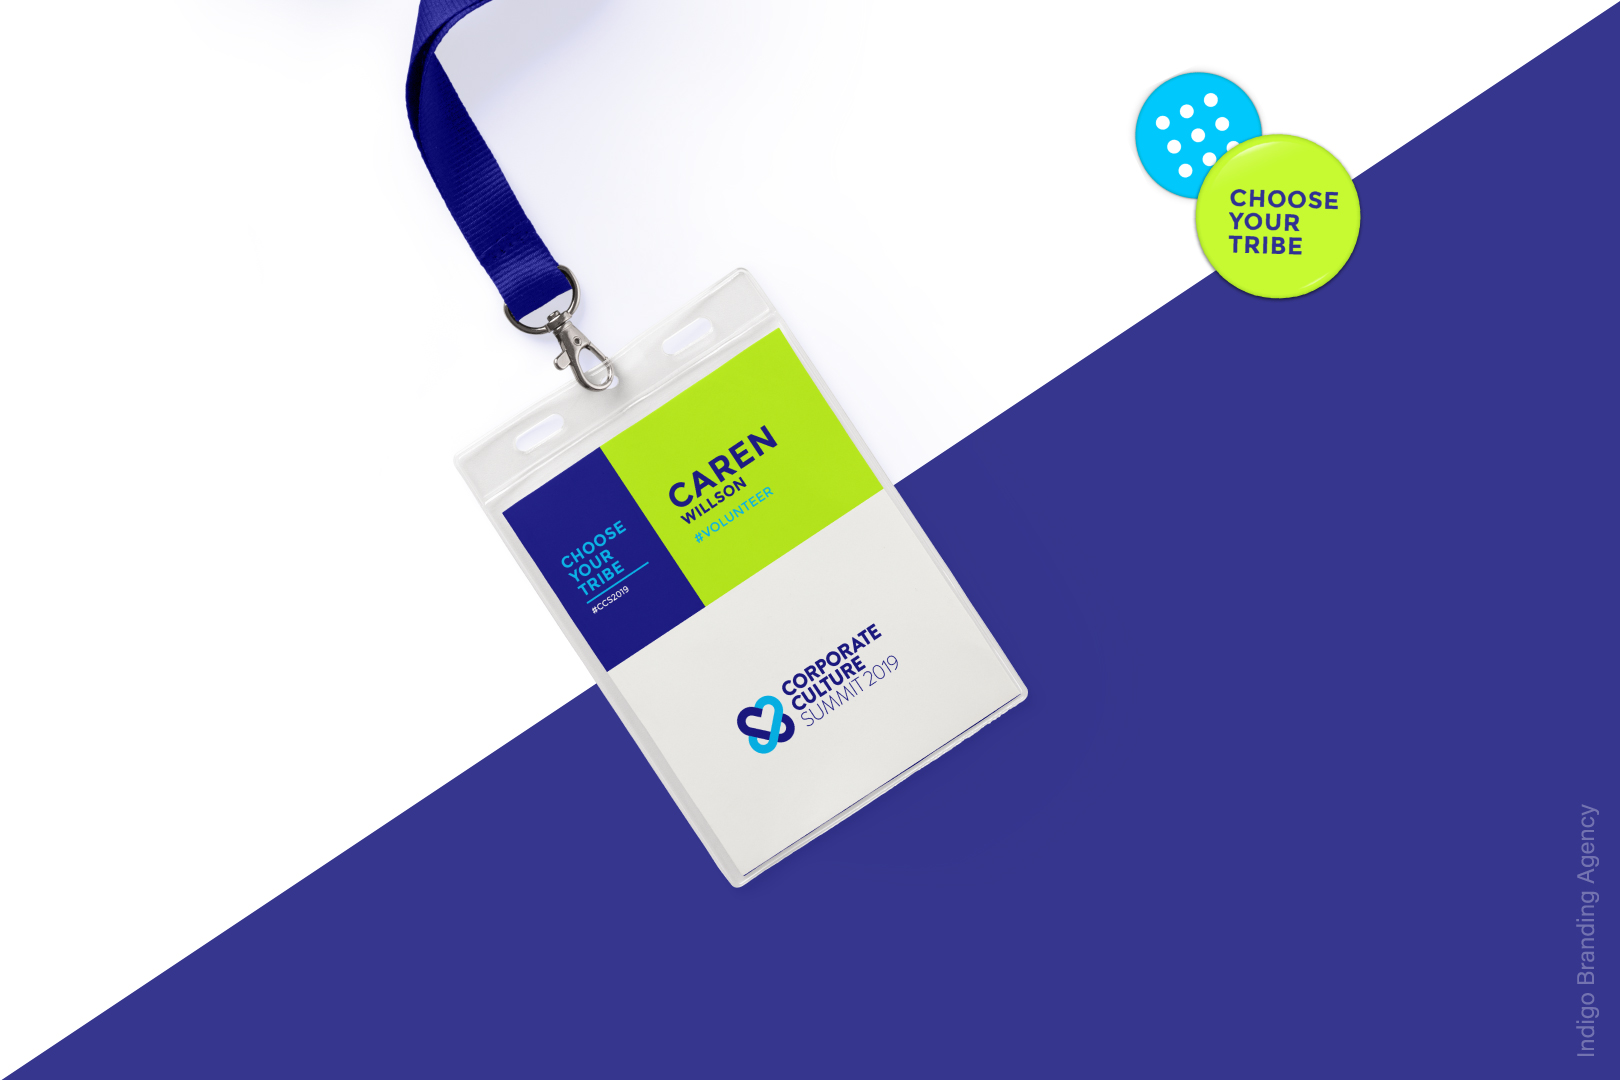 Corporate Culture Summit branding and logo design by Indigo branding